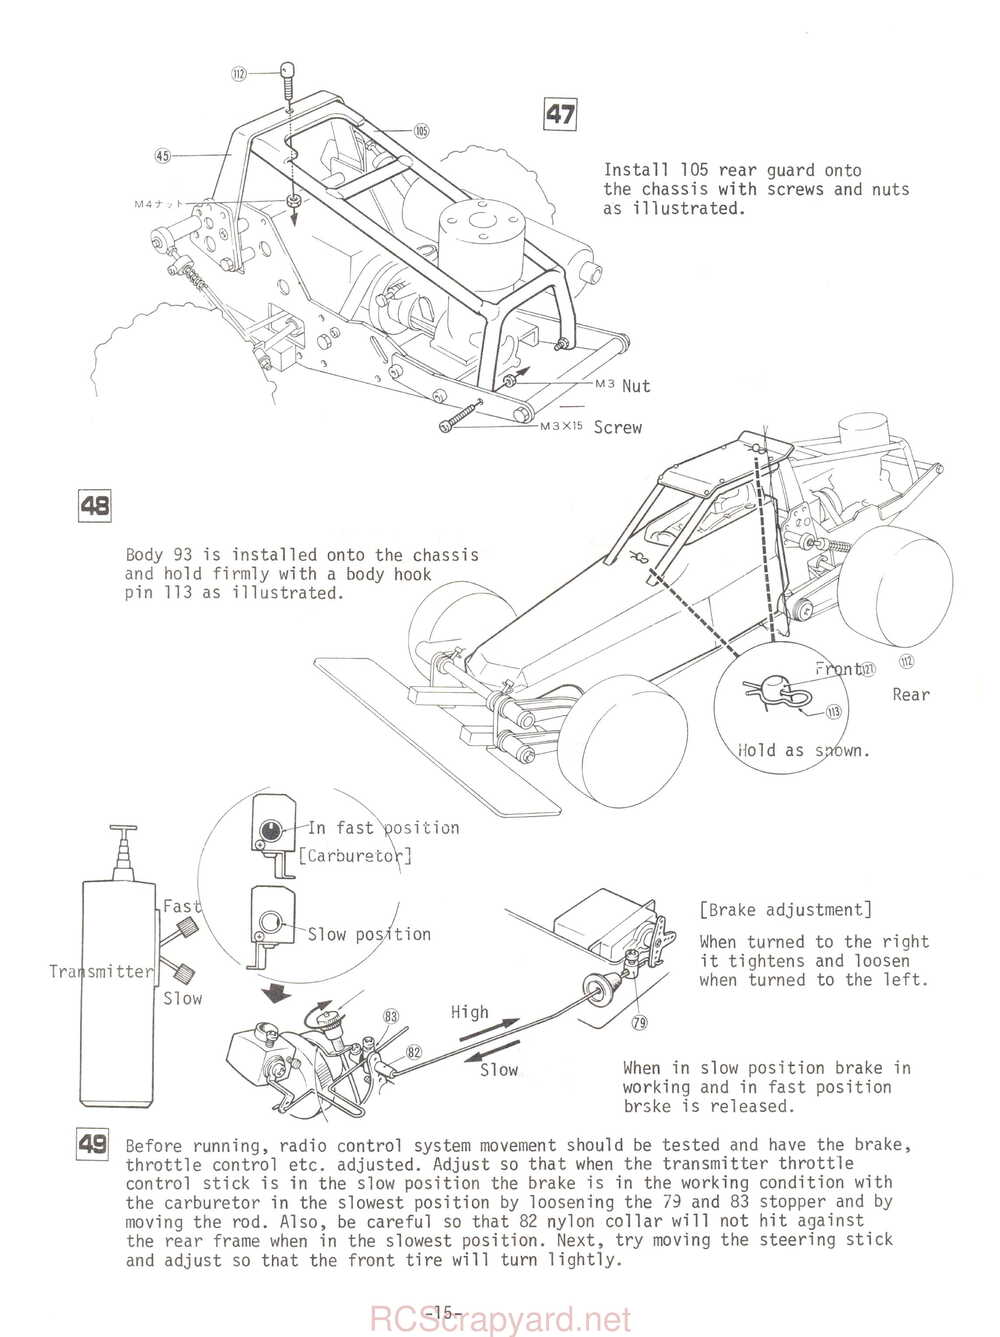 Kyosho - 3045 - Circuit-20-Extra - Racing-Baja - Manual - Page 15